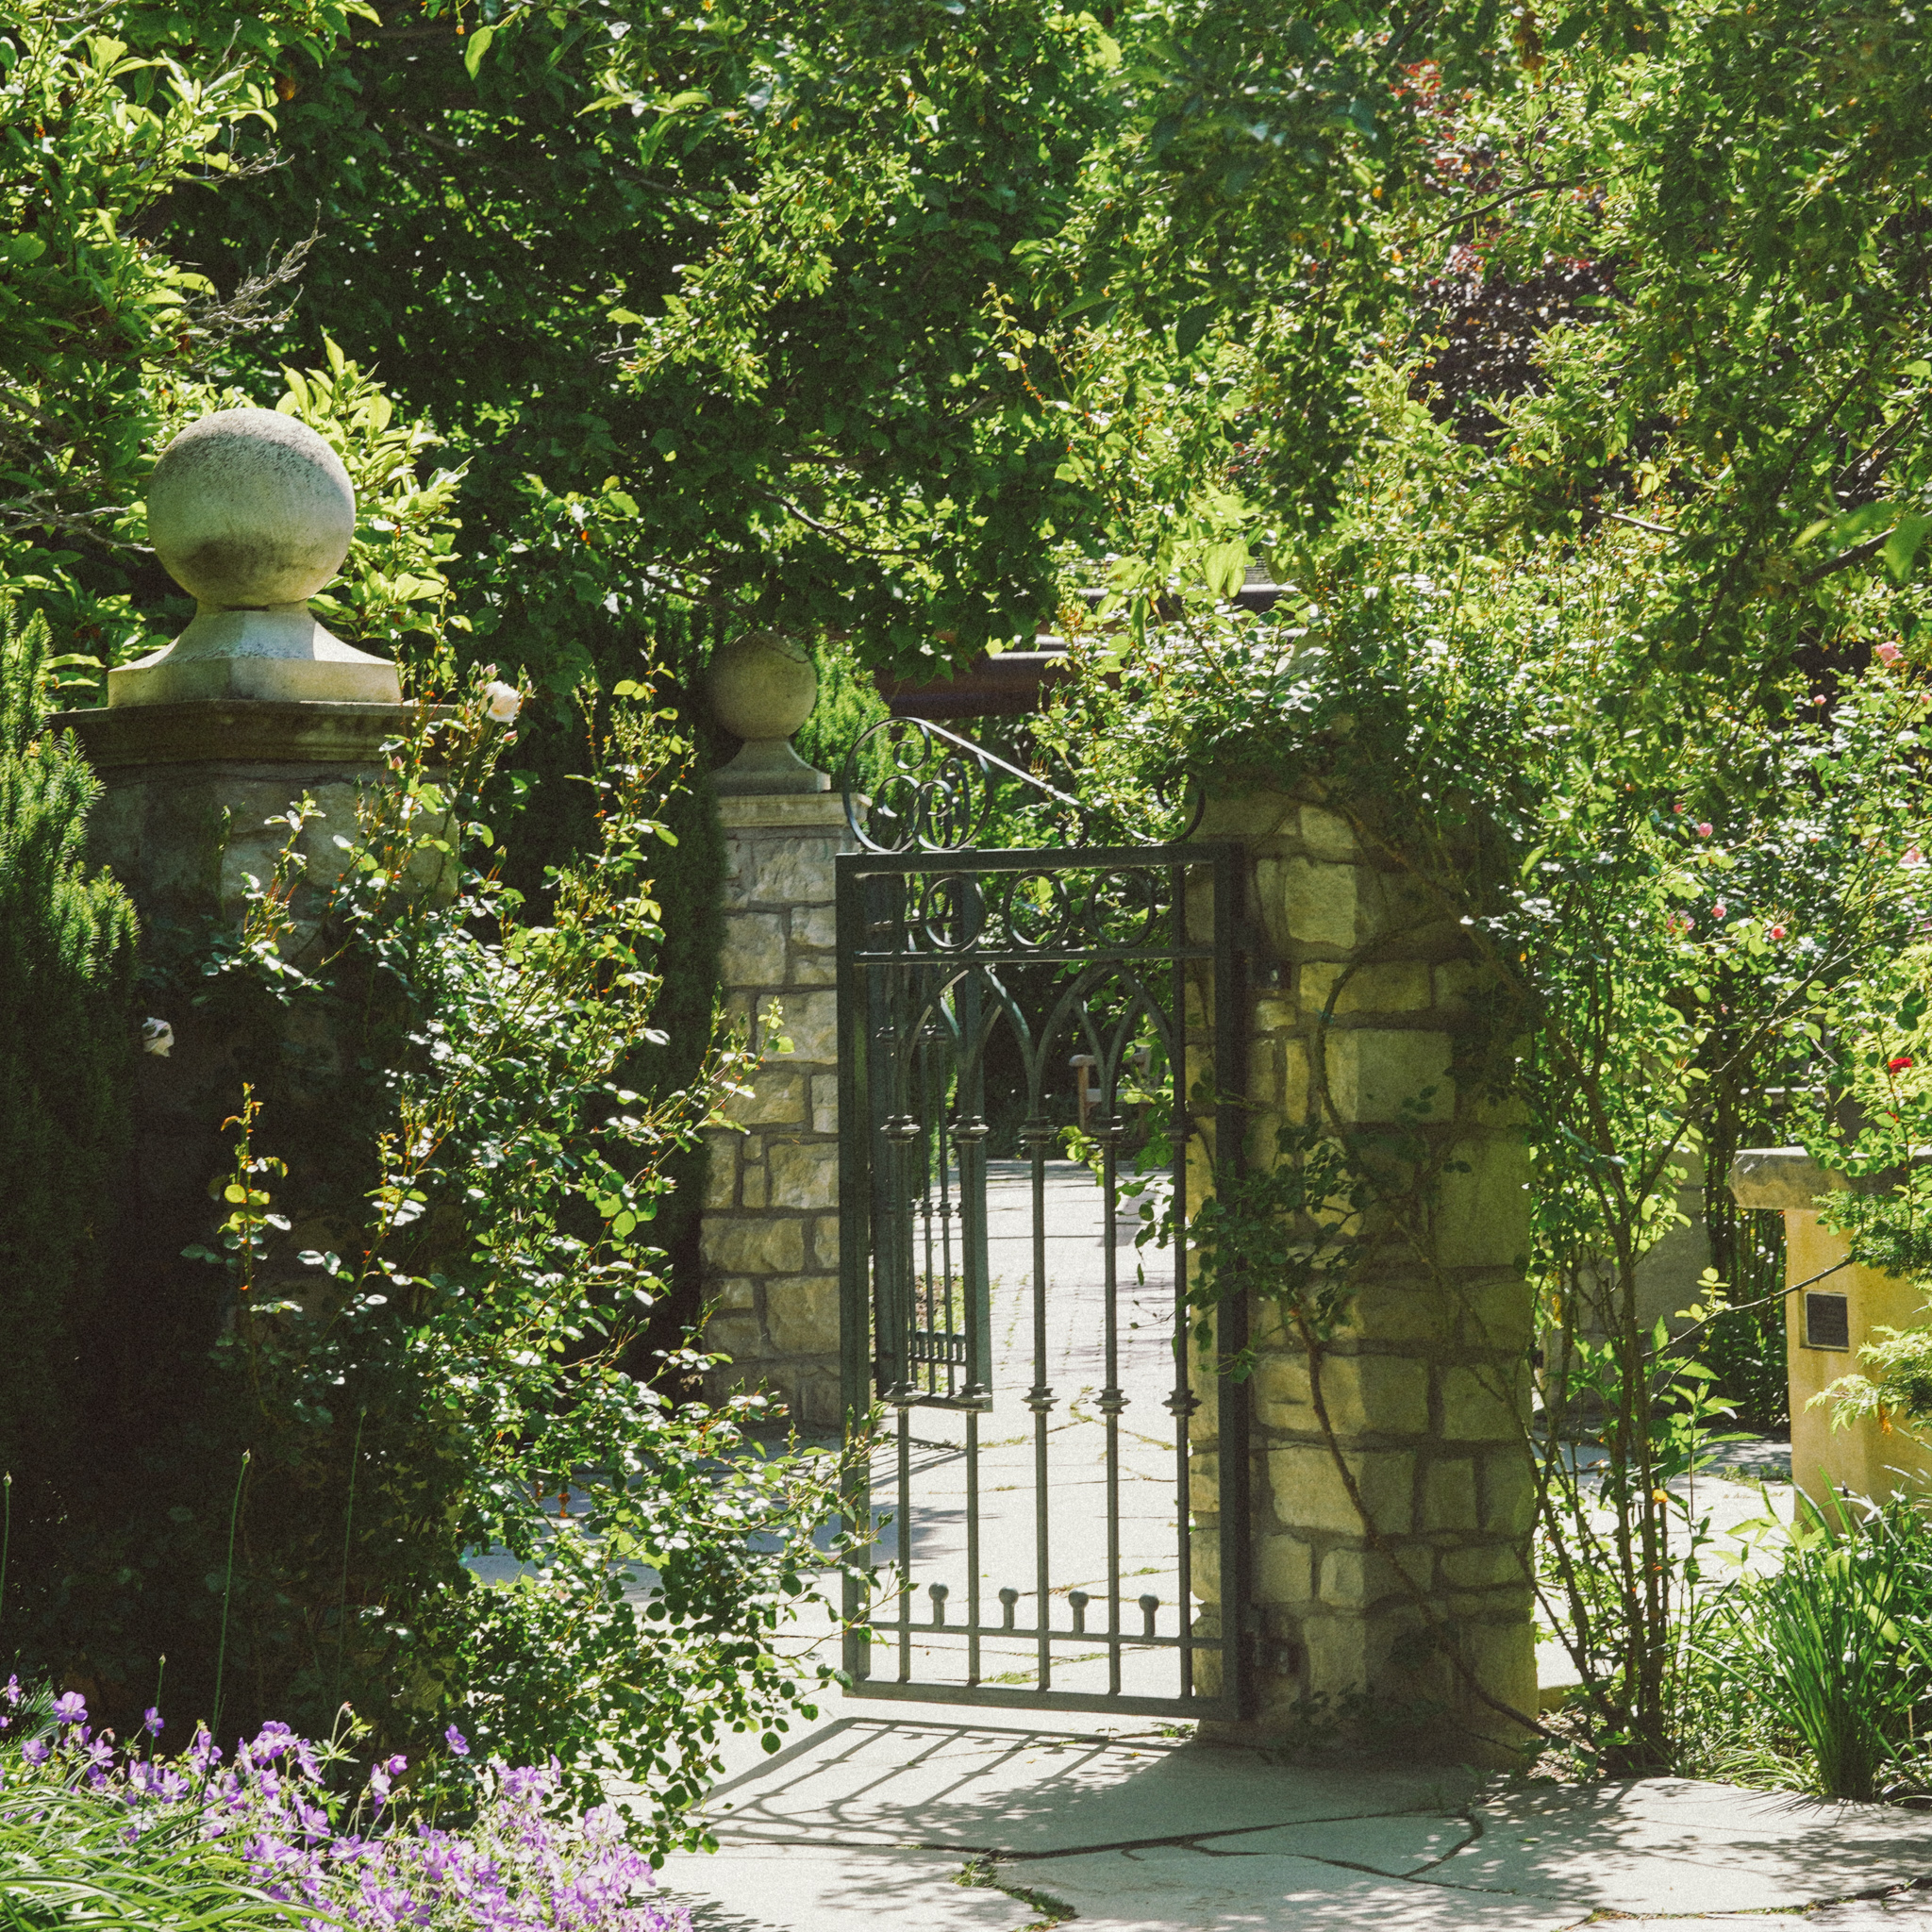 Wrought iron English garden gate